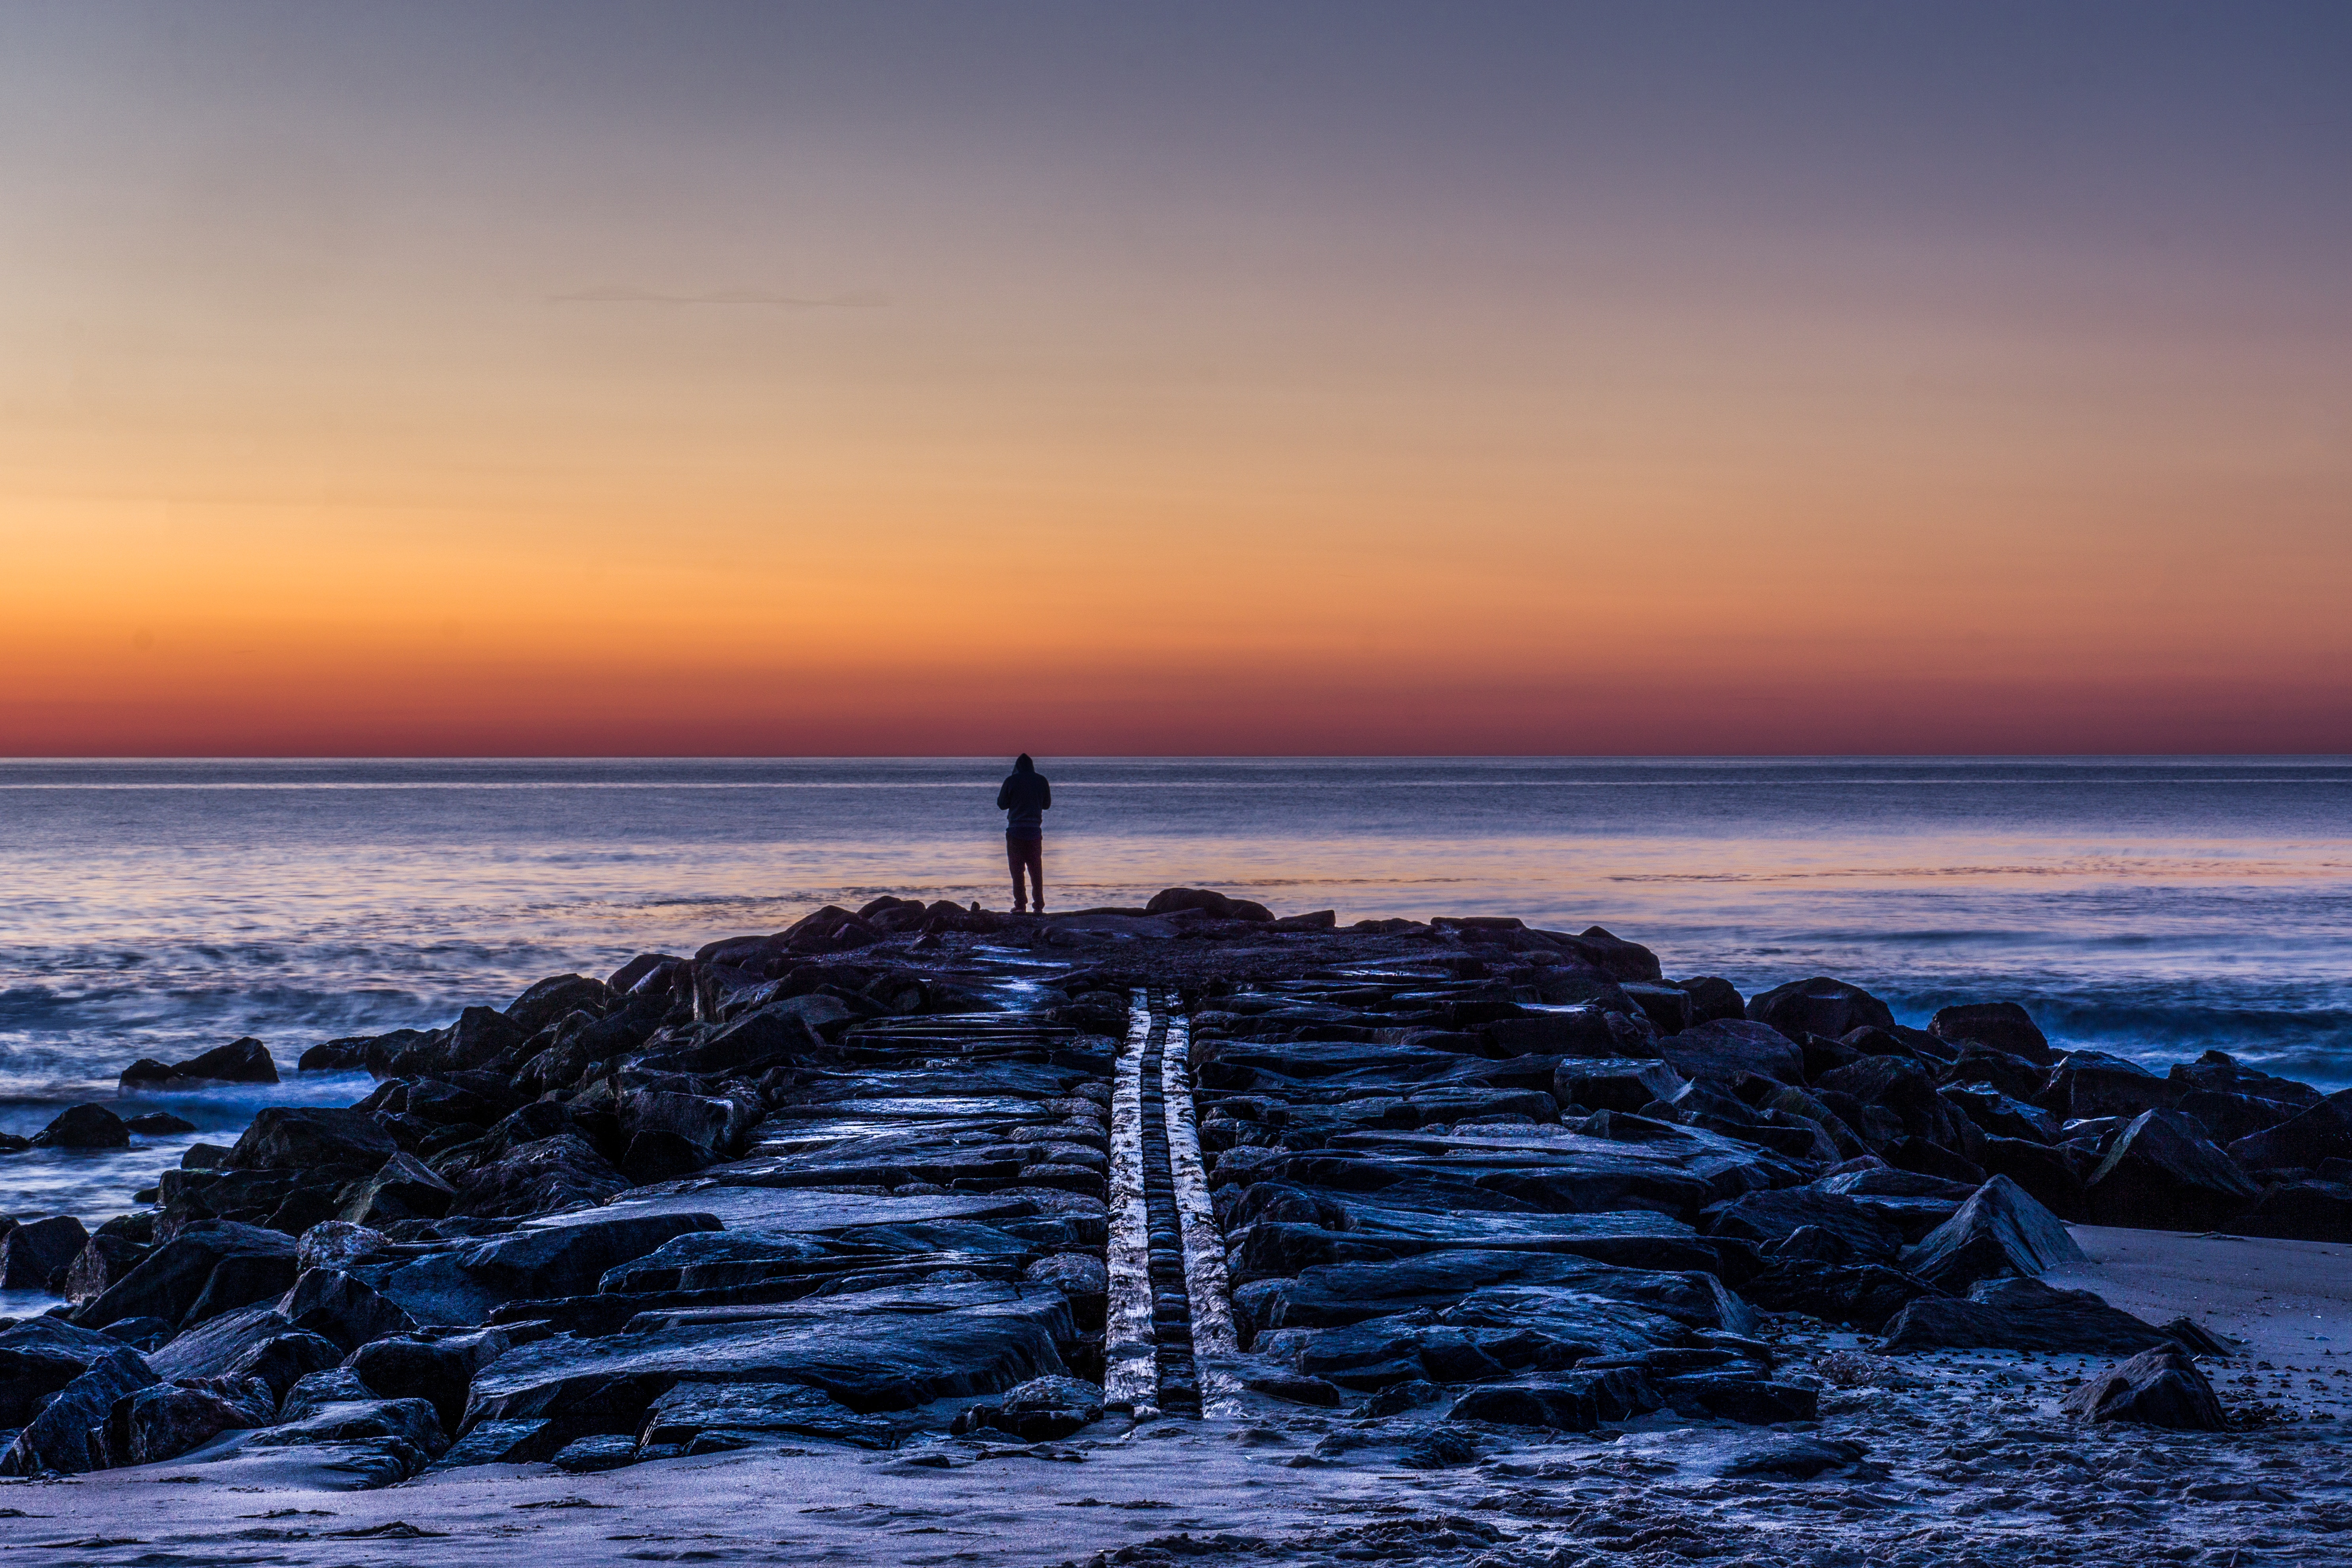 Бесплатное фото Мужчина на берегу моря